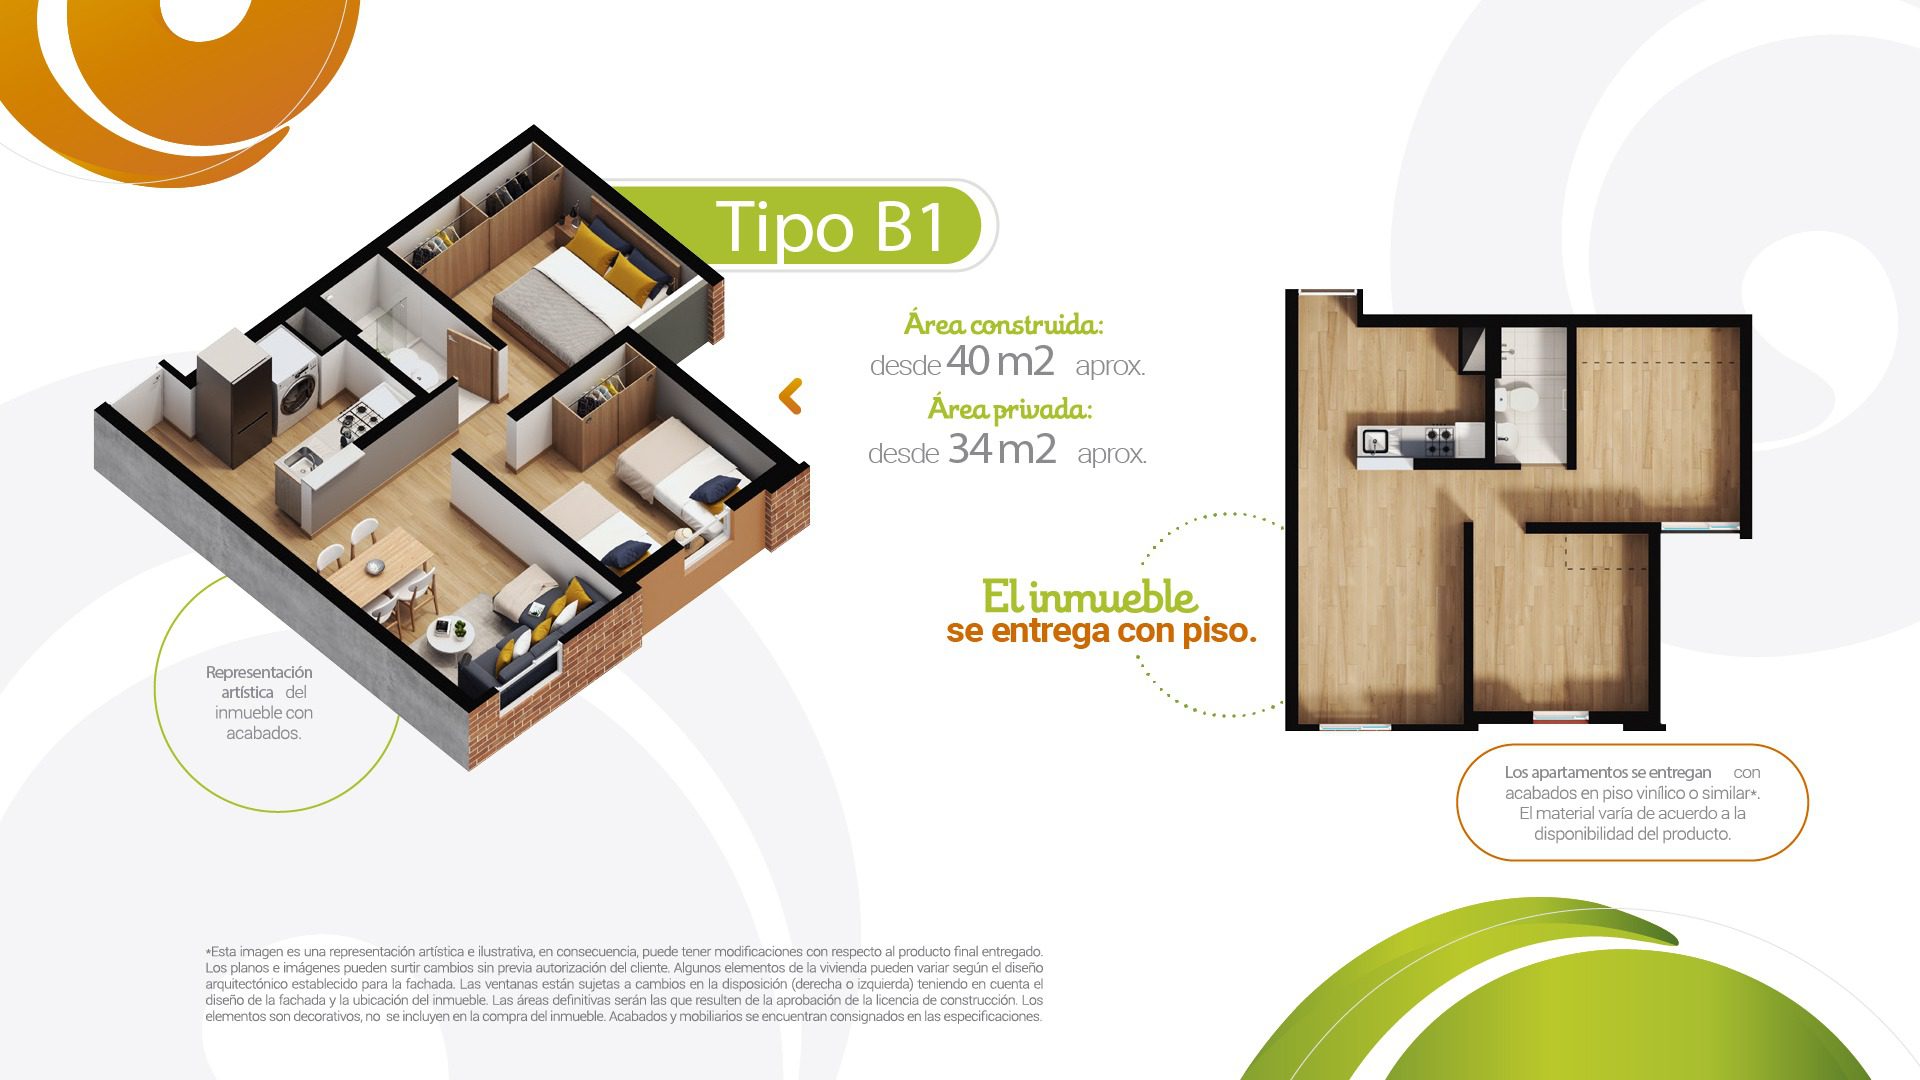 TIPO B1
 
  
   Área construida aprox.:
   40  m2
  
  
   Área privada aprox:
   34  m2